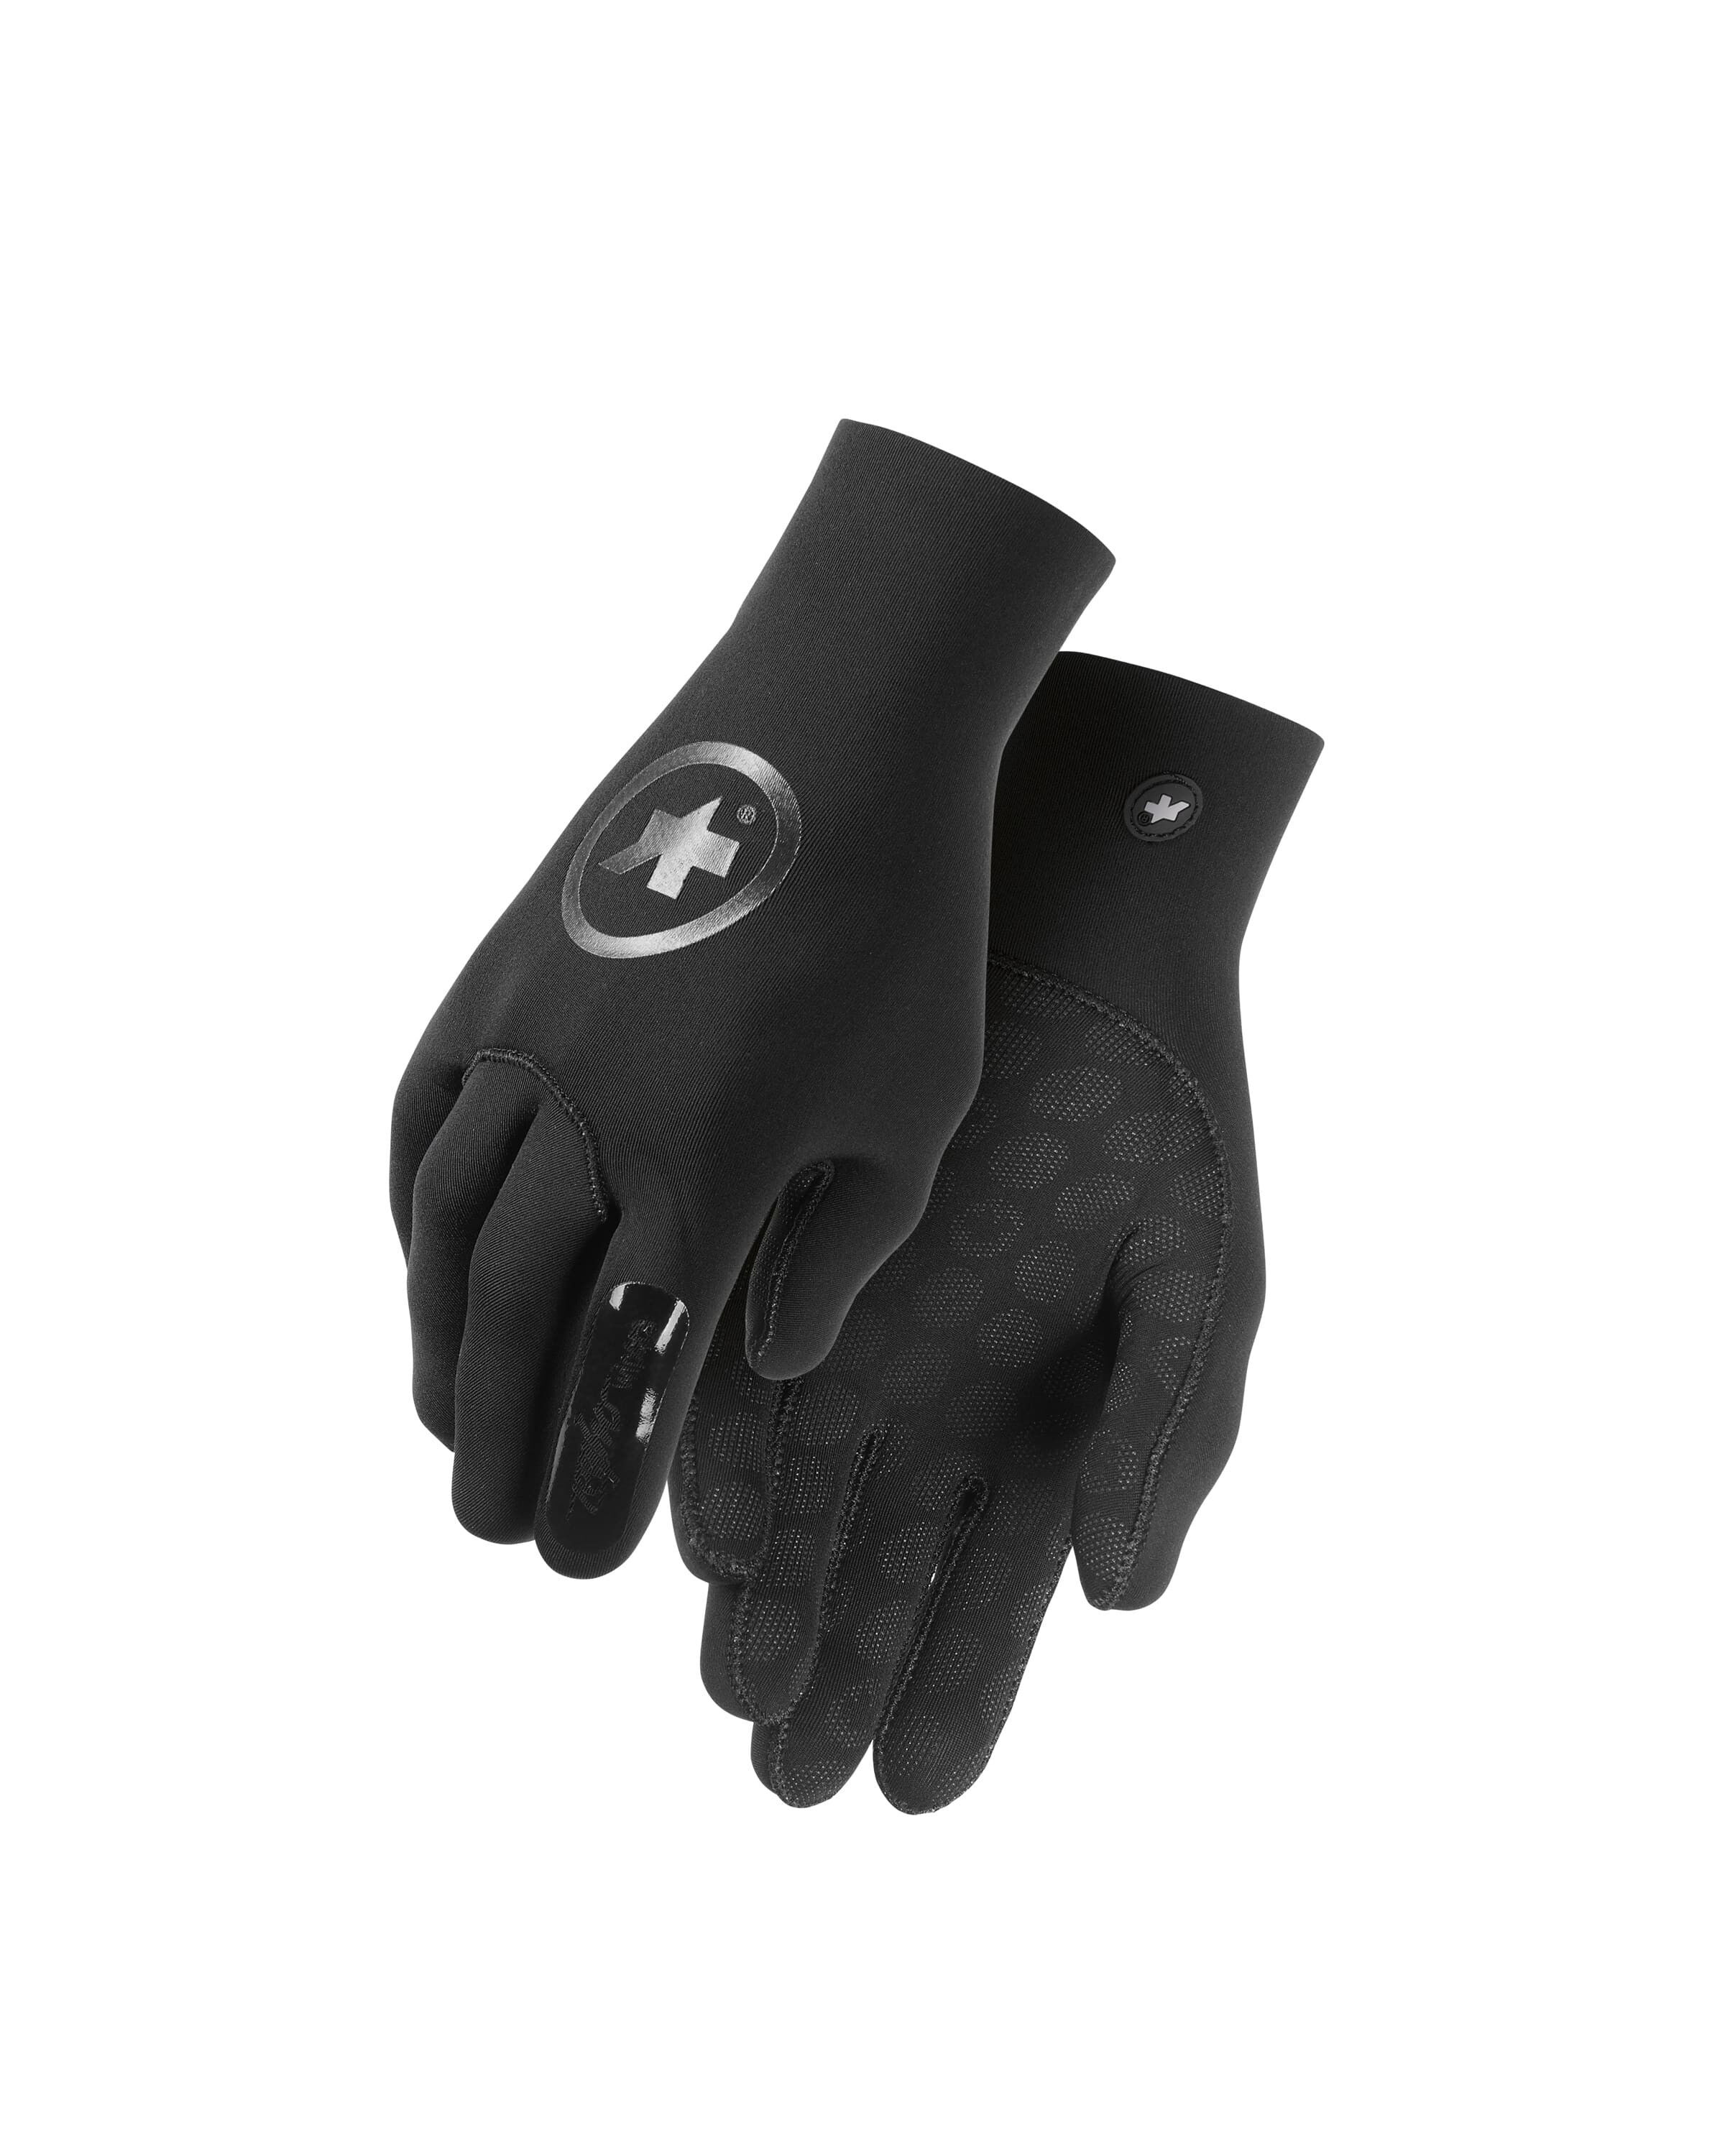 Assos rainGloves evo7 - Cycling gloves